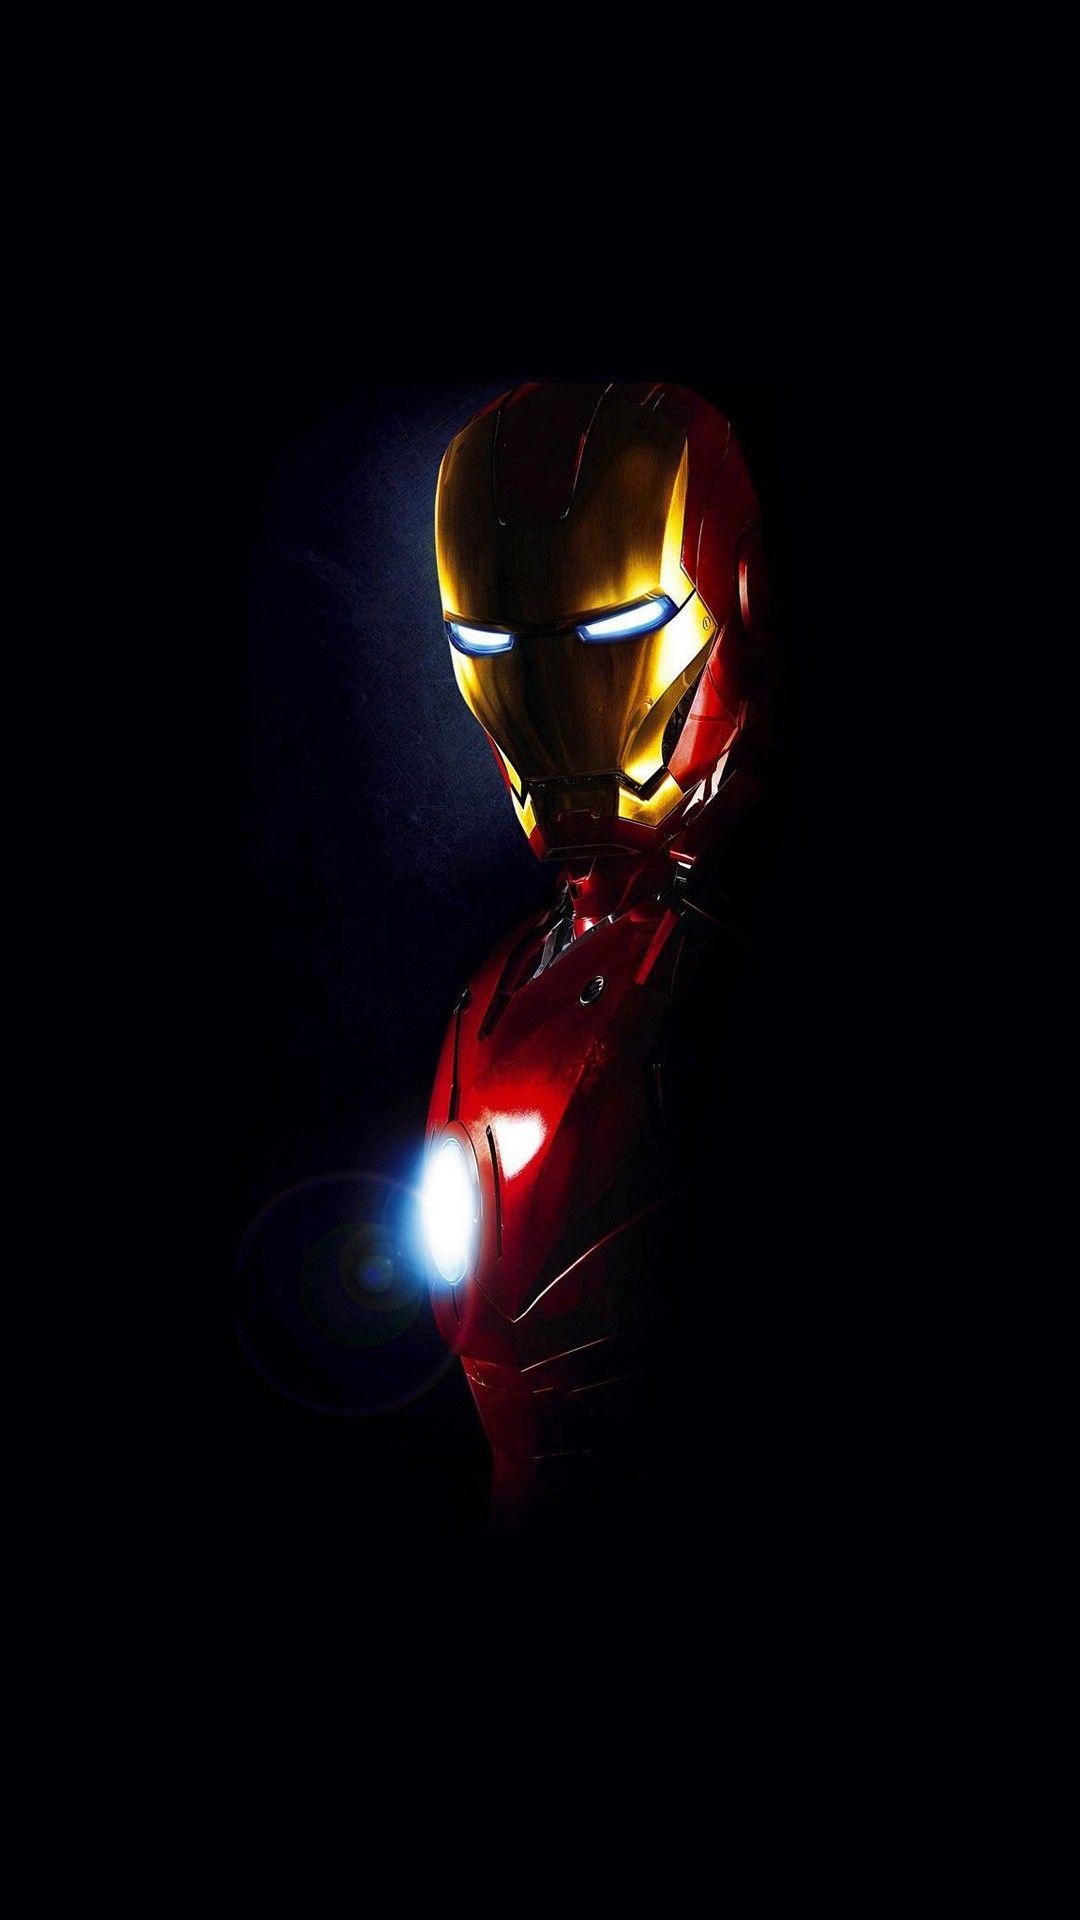 Iron Man Shadow Minimal Smartphone Wallpaper and Lockscreen